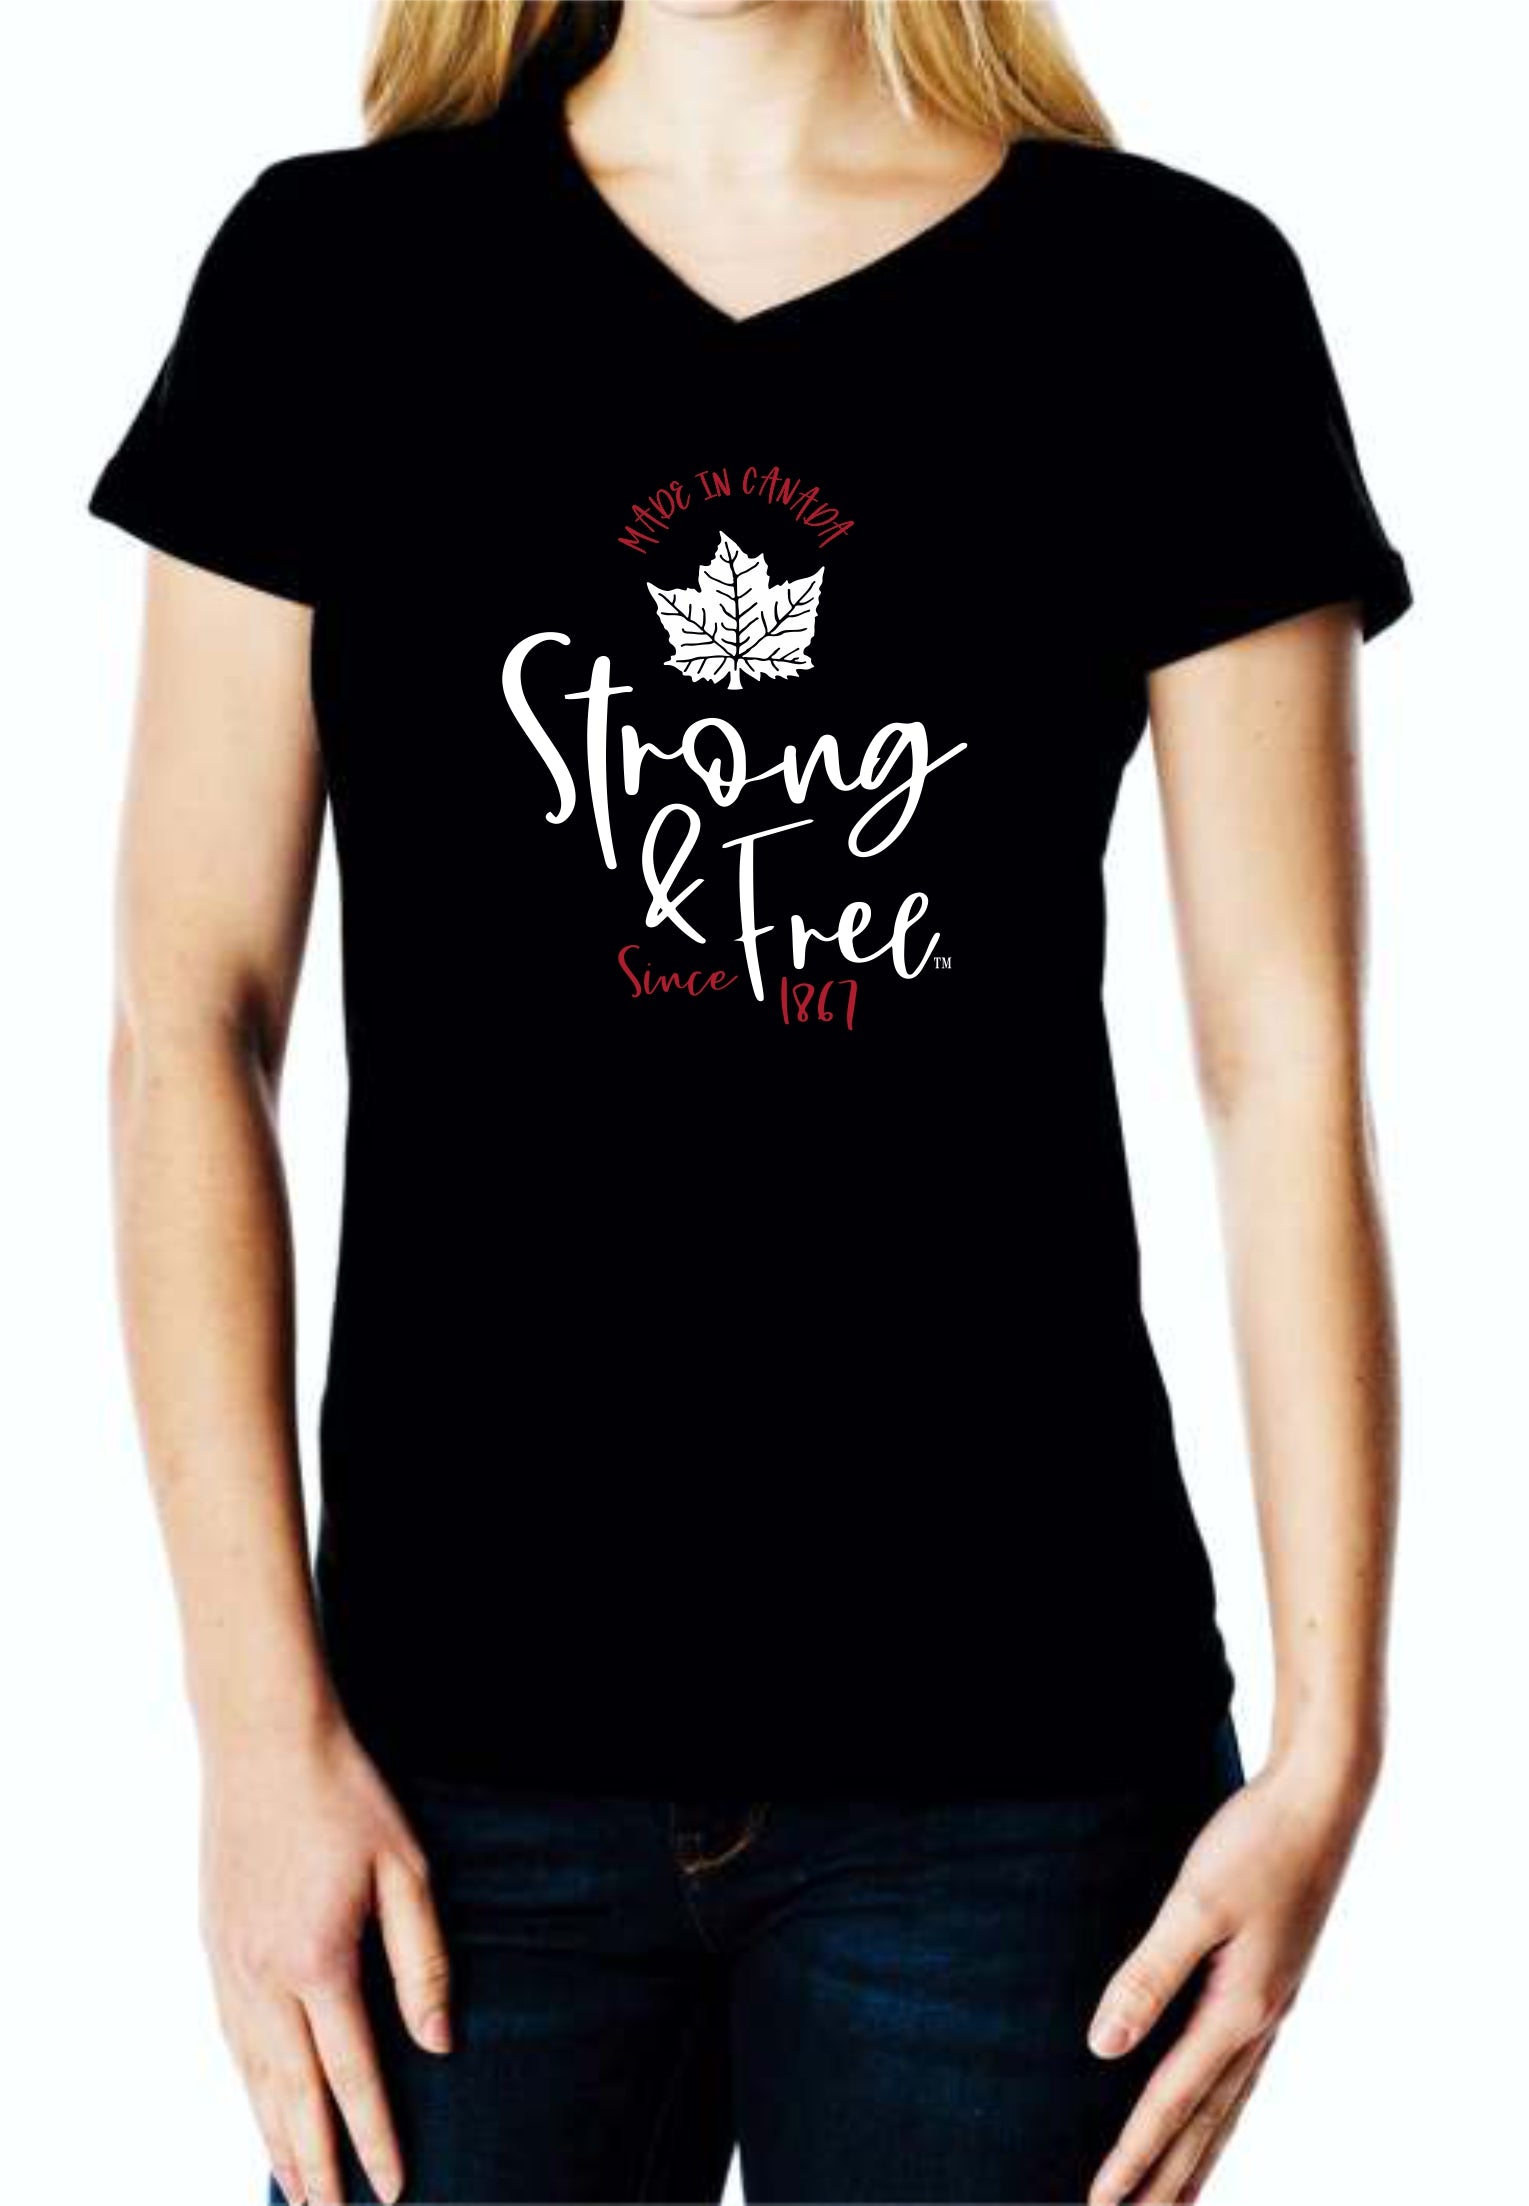 Camiseta con logotipo Strong &amp; Free™ para mujer